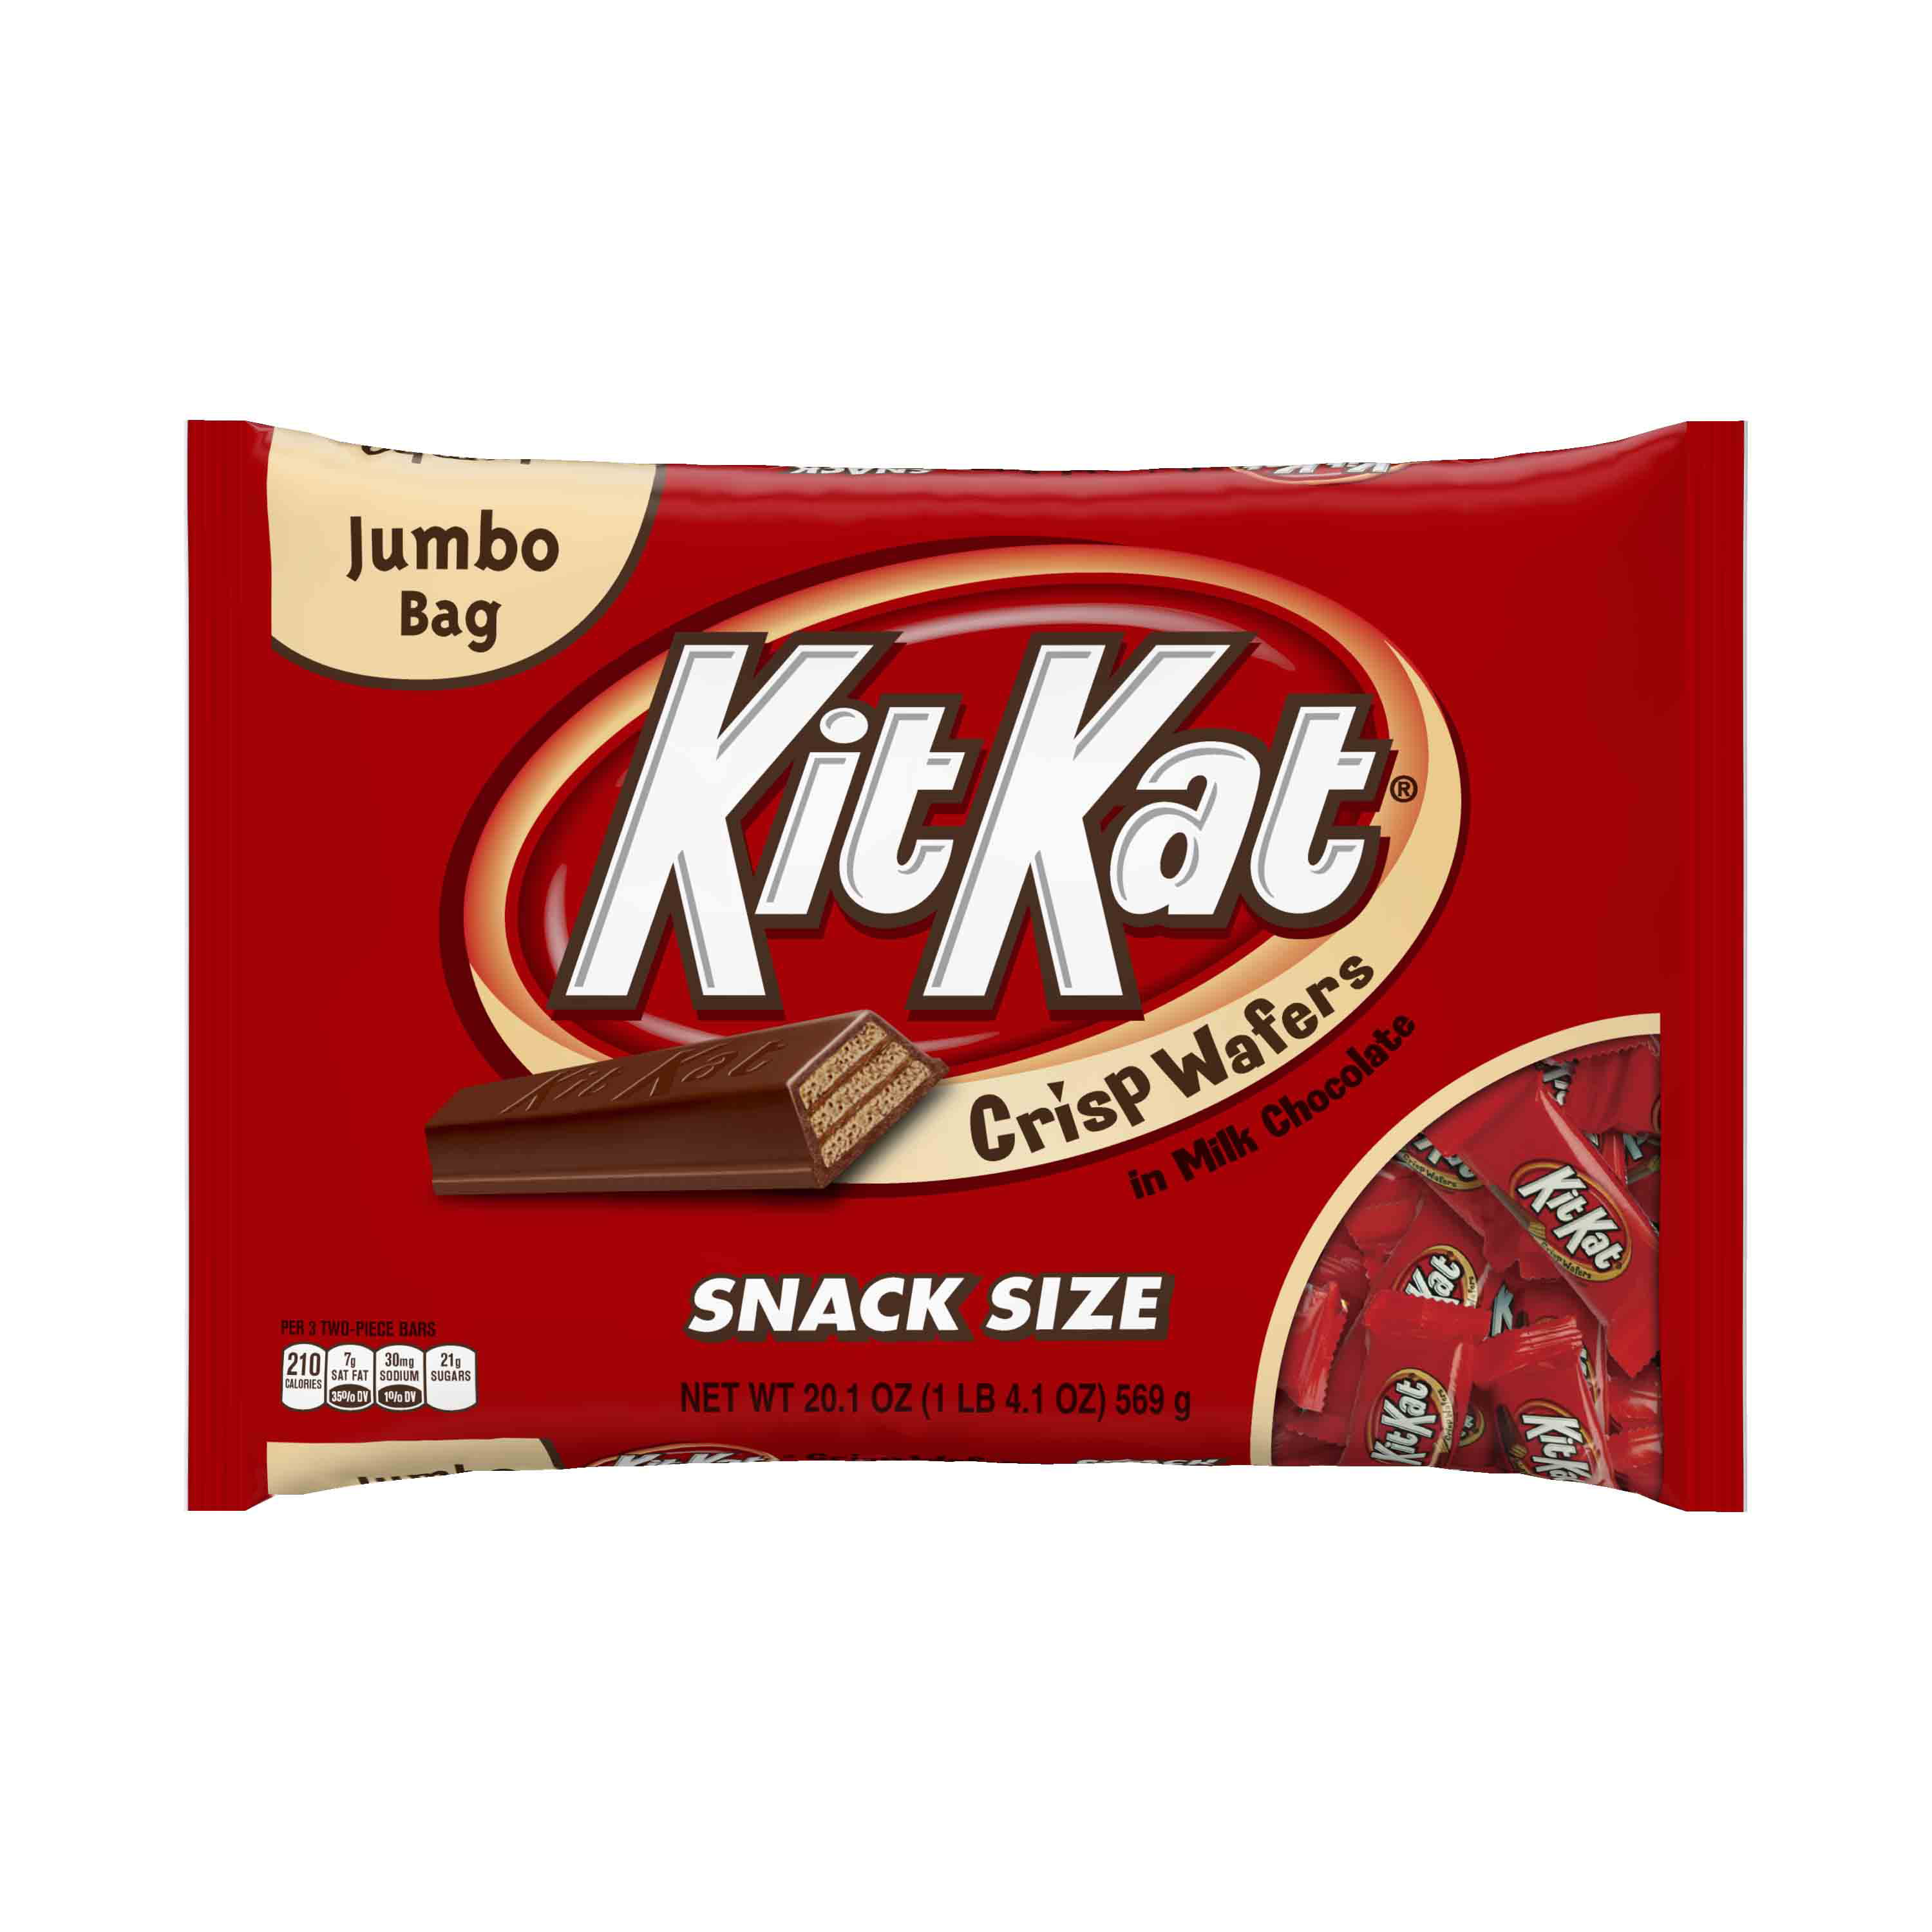 Kit Kat Snack Size Crisp Wafers Jumbo Bag 201 O